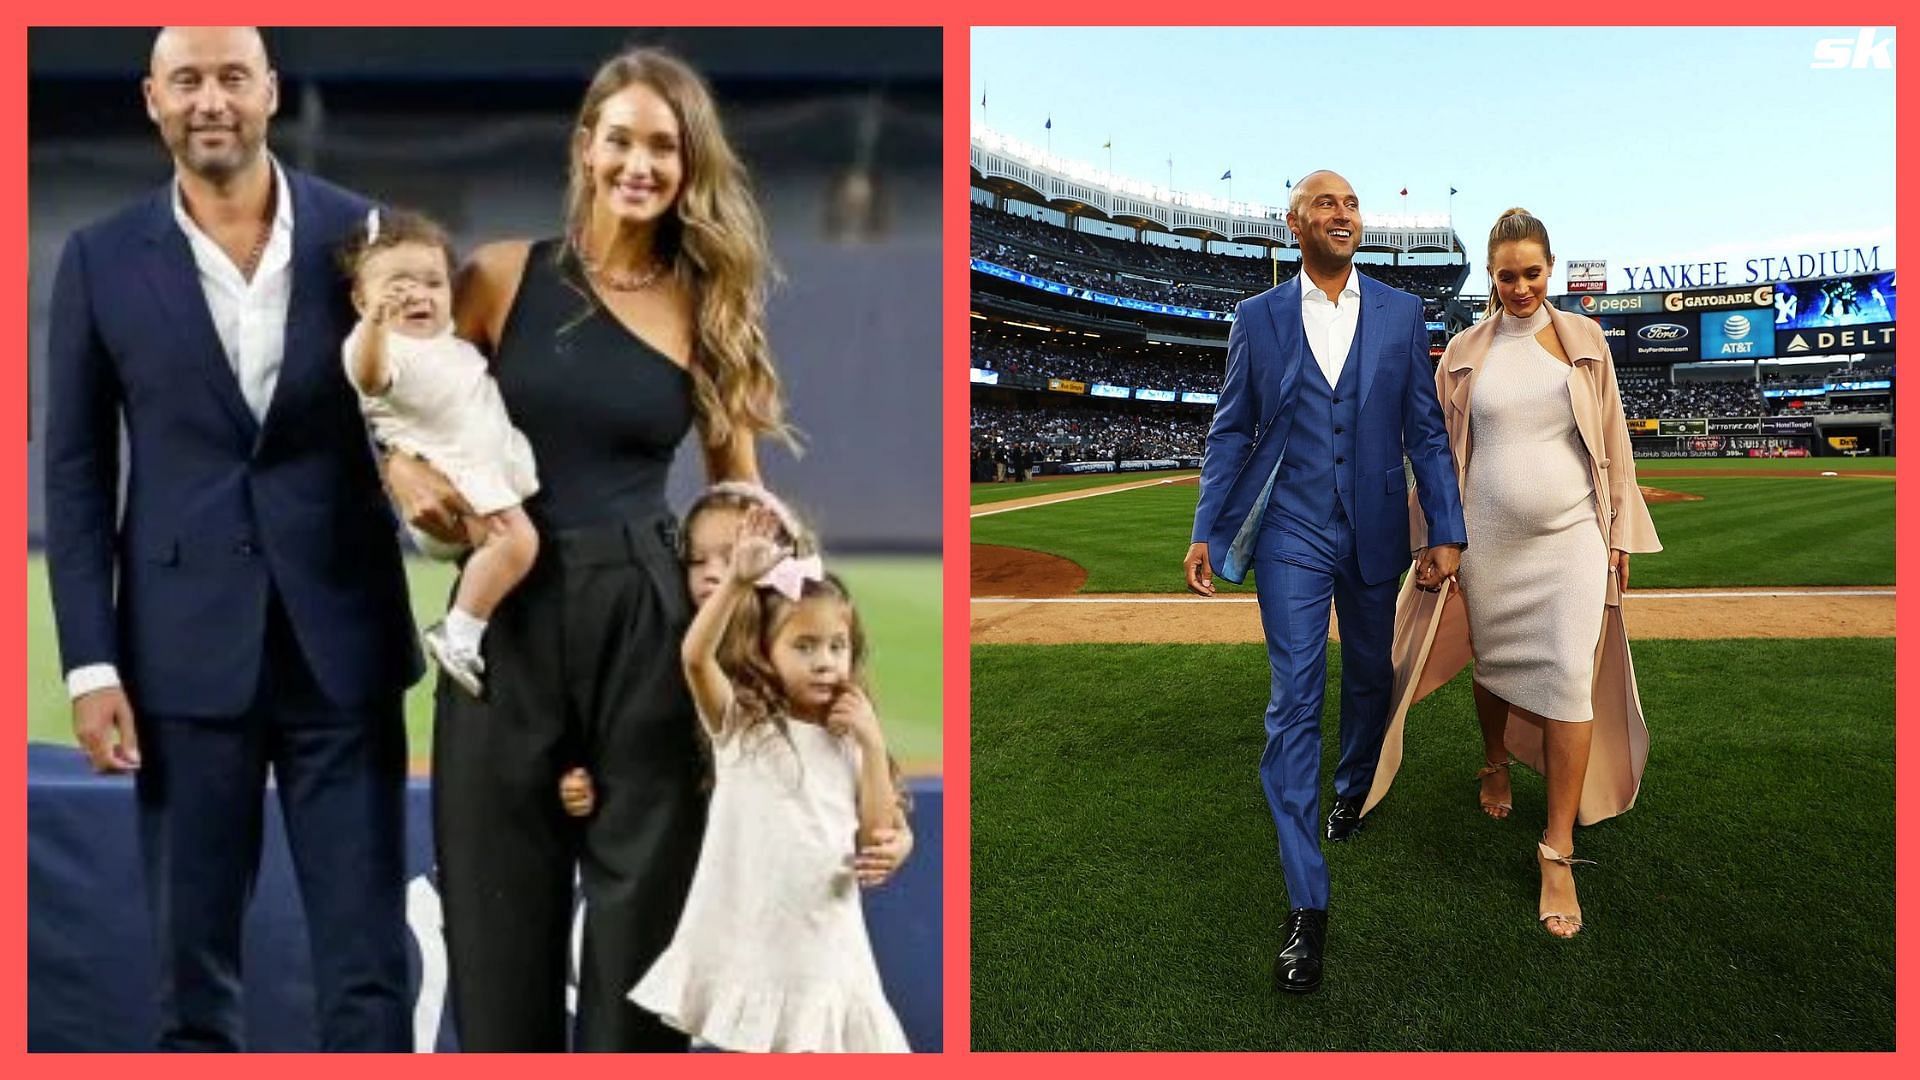 Derek Jeter with his wife, Hannah Jeter and children at Yankee Stadium.